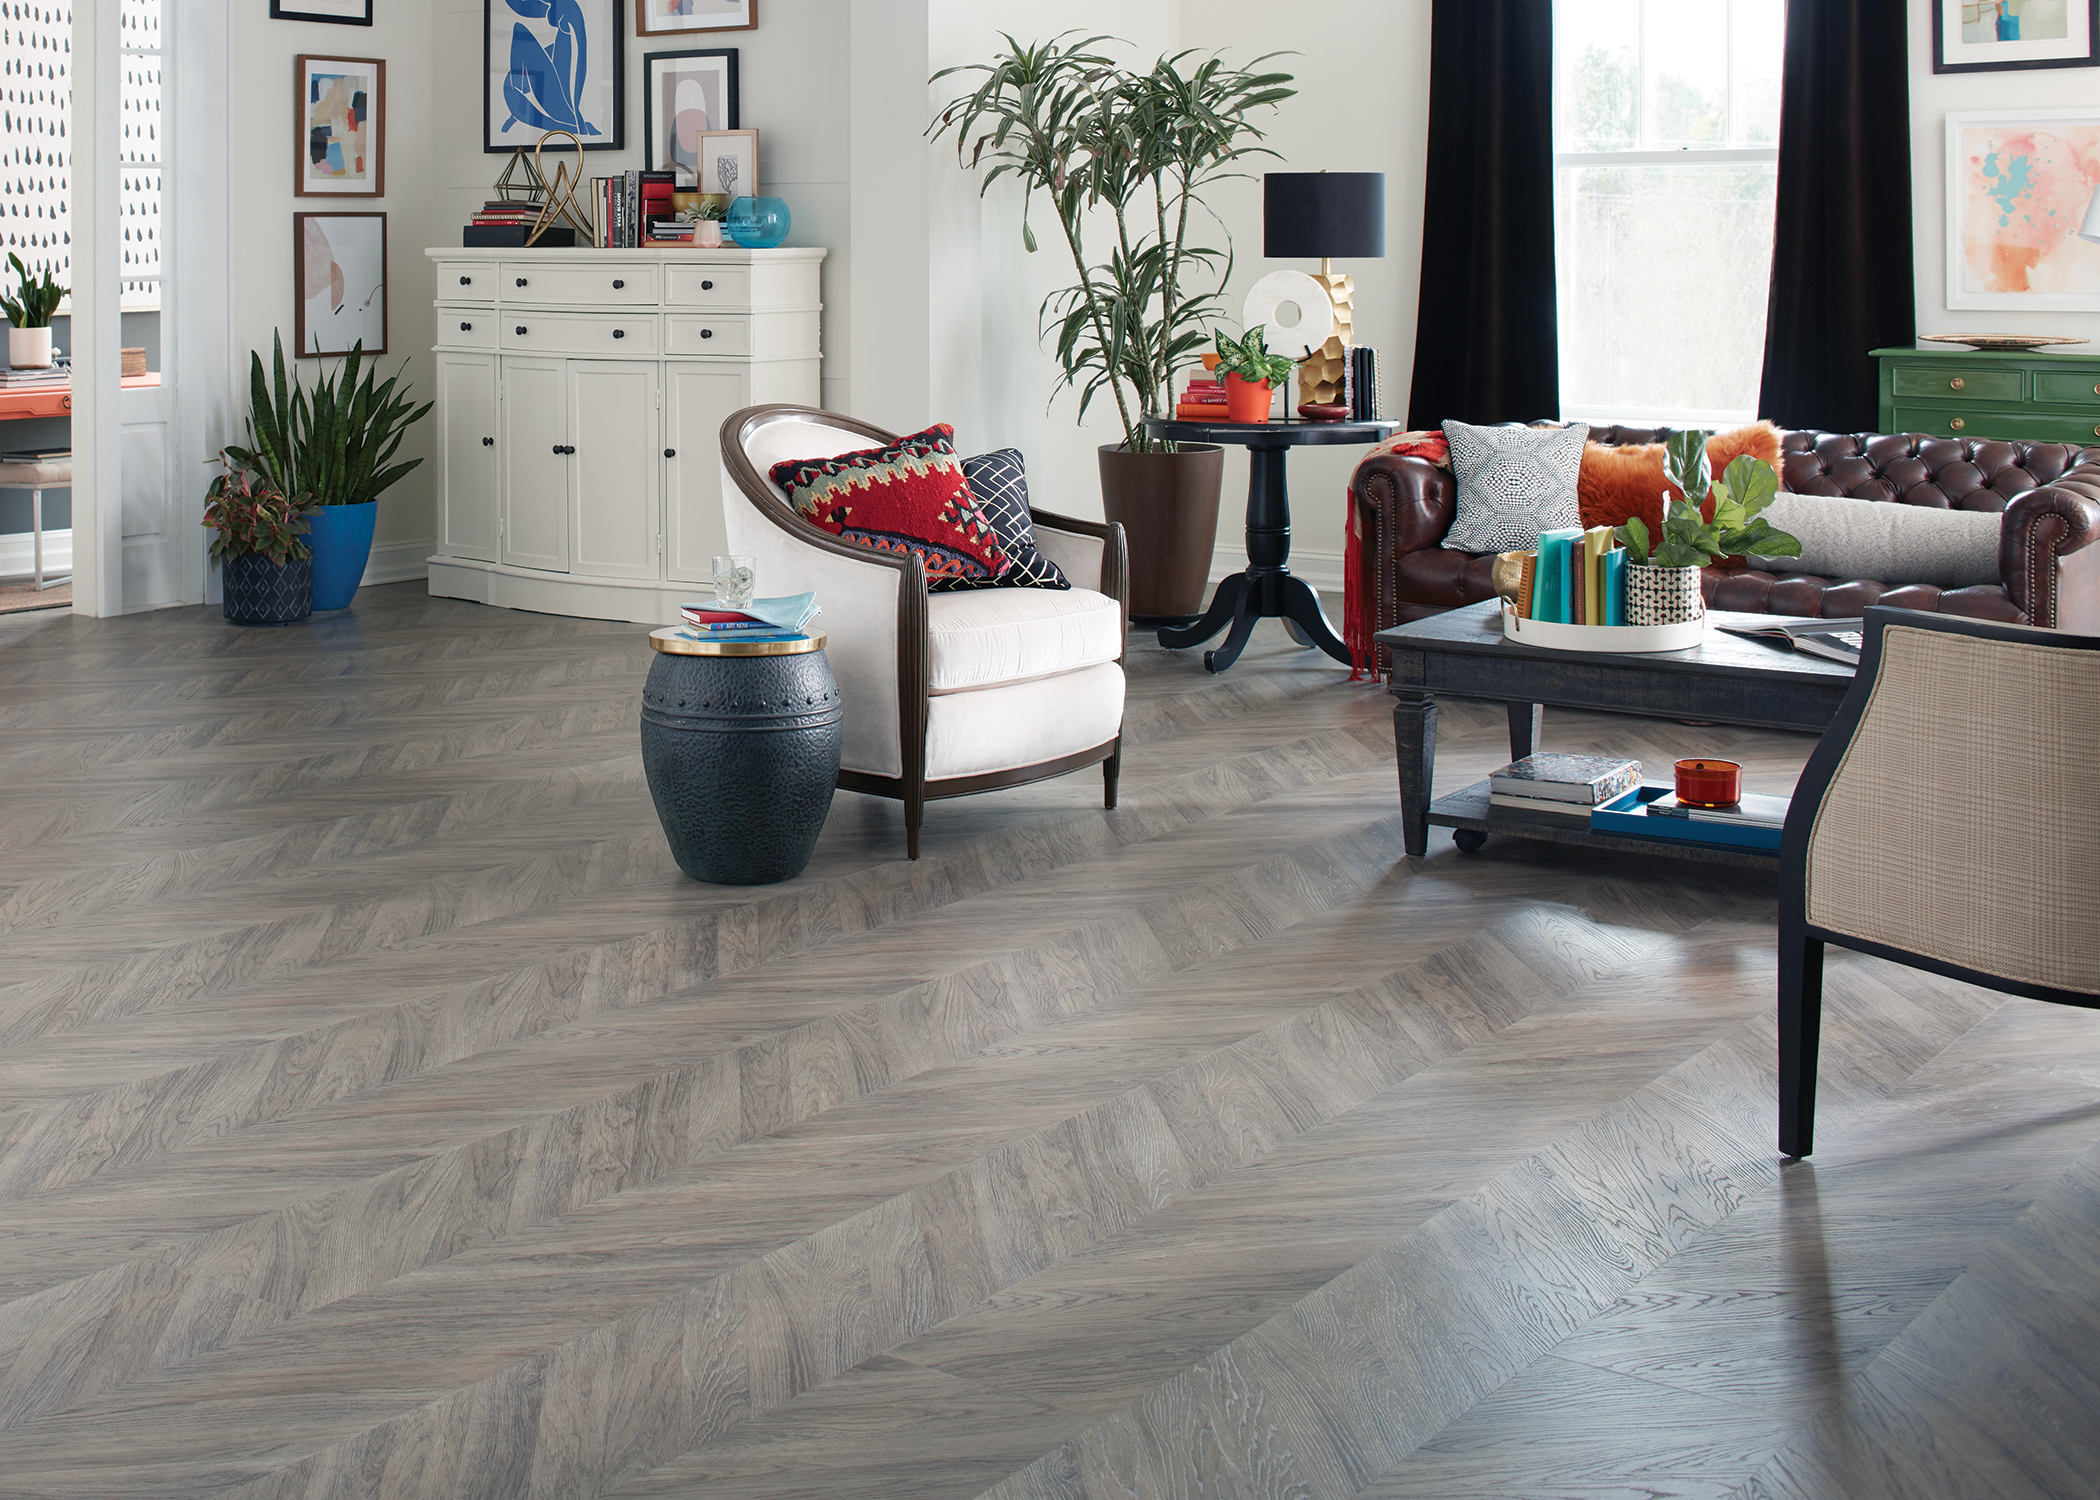 greige chevron waterproof rigid vinyl plank floor in living room with white barrel chair and dark brown leather sofa